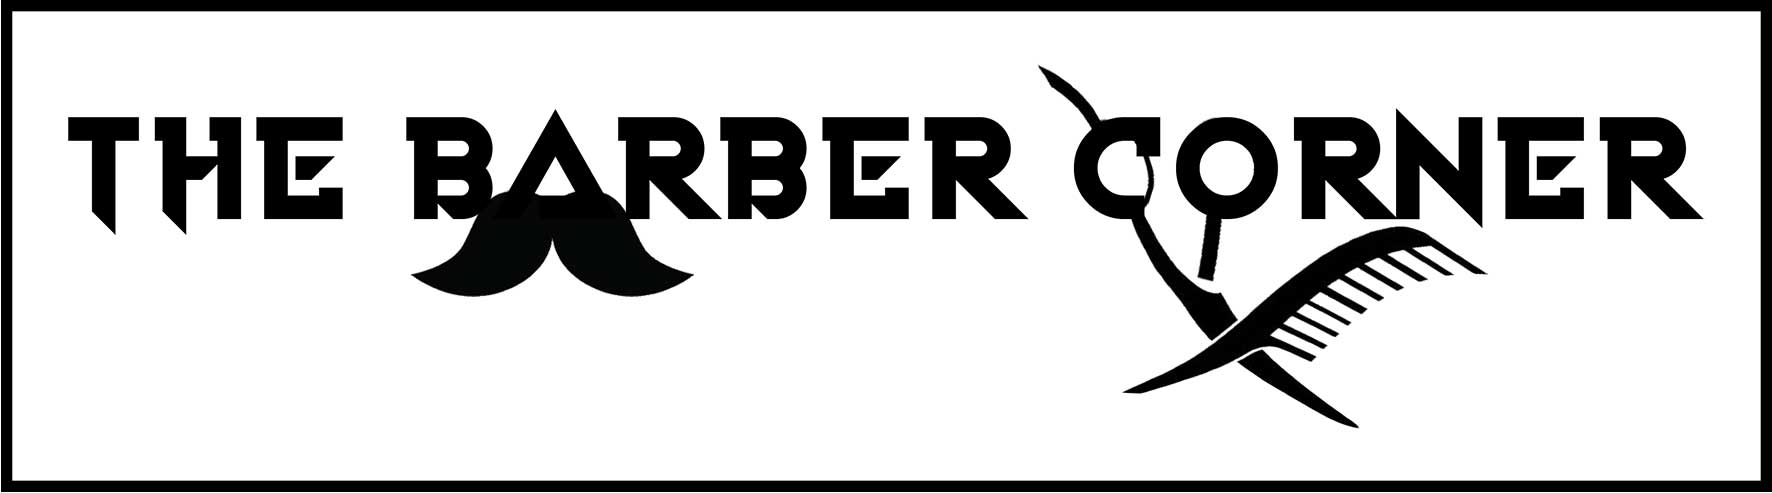 logo the barber corner 